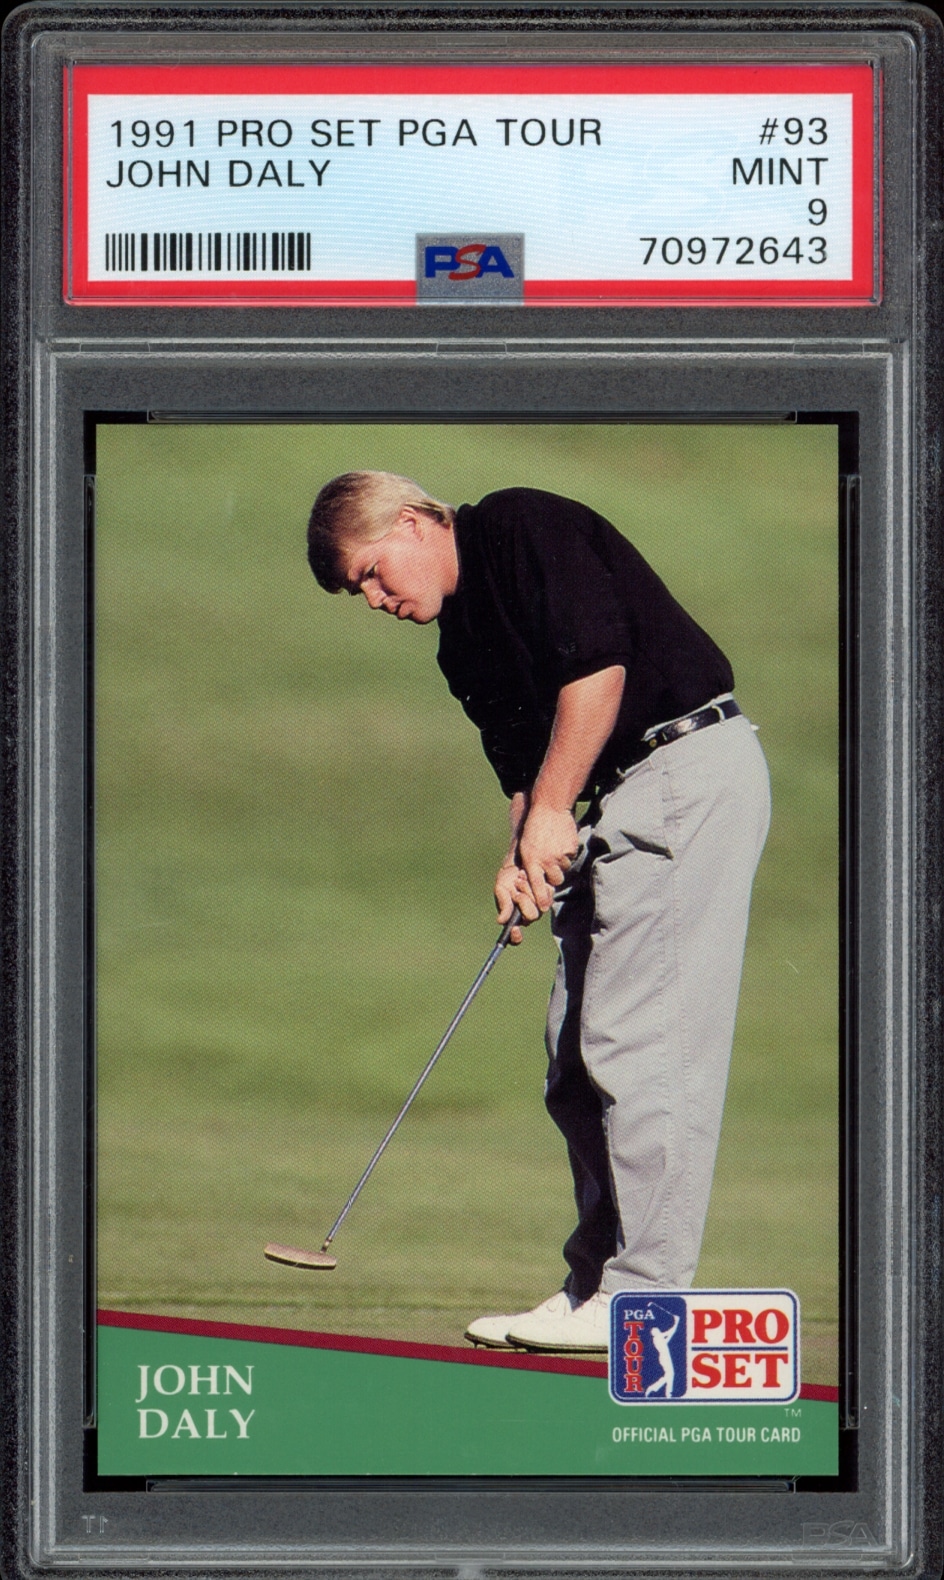 1991 Pro Set PGA Tour John Daly golf card, graded MINT 9 by PSA.